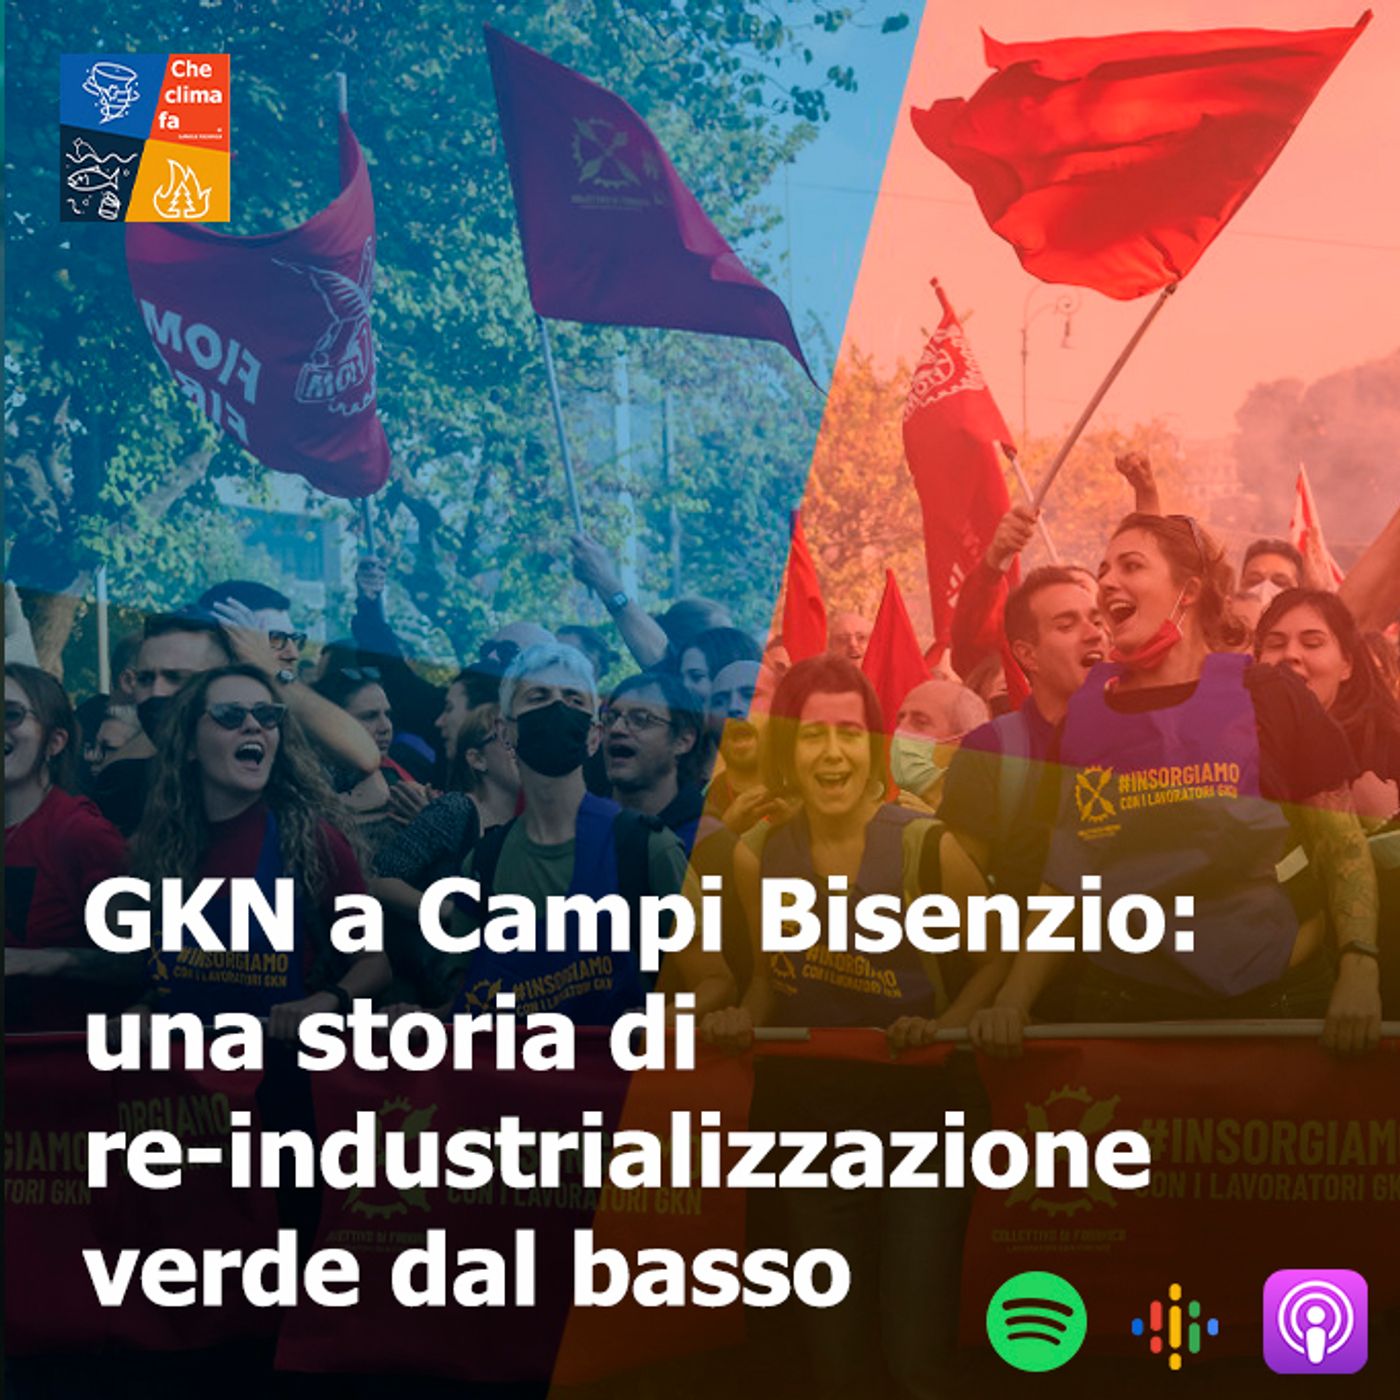 90 - GKN a Campi Bisenzio: una storia di re-industrializzazione verde dal basso